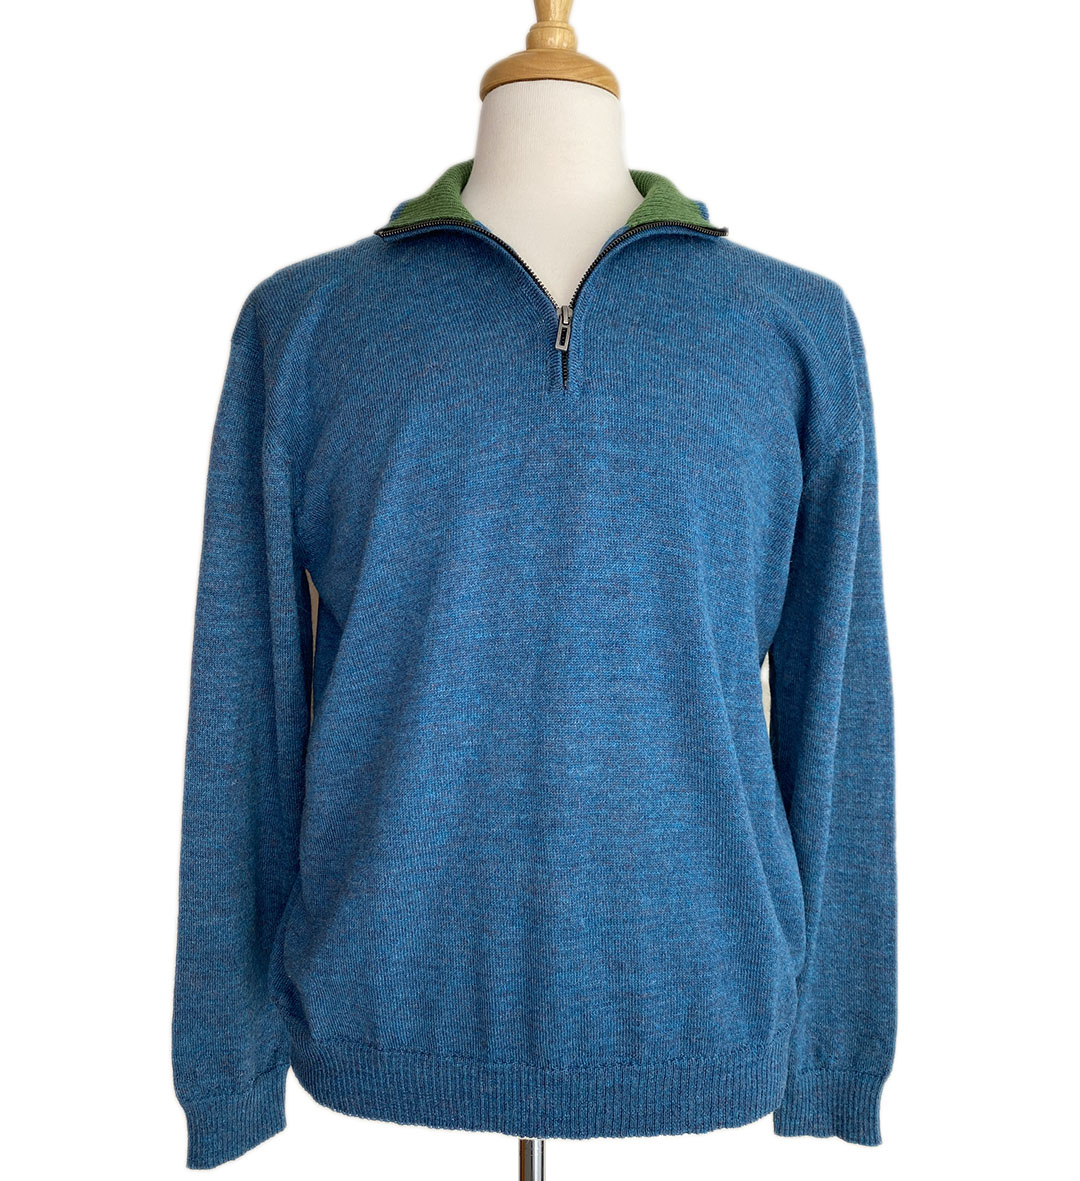 NEW - Brent Half Zip Sweater - Blue/Green -1